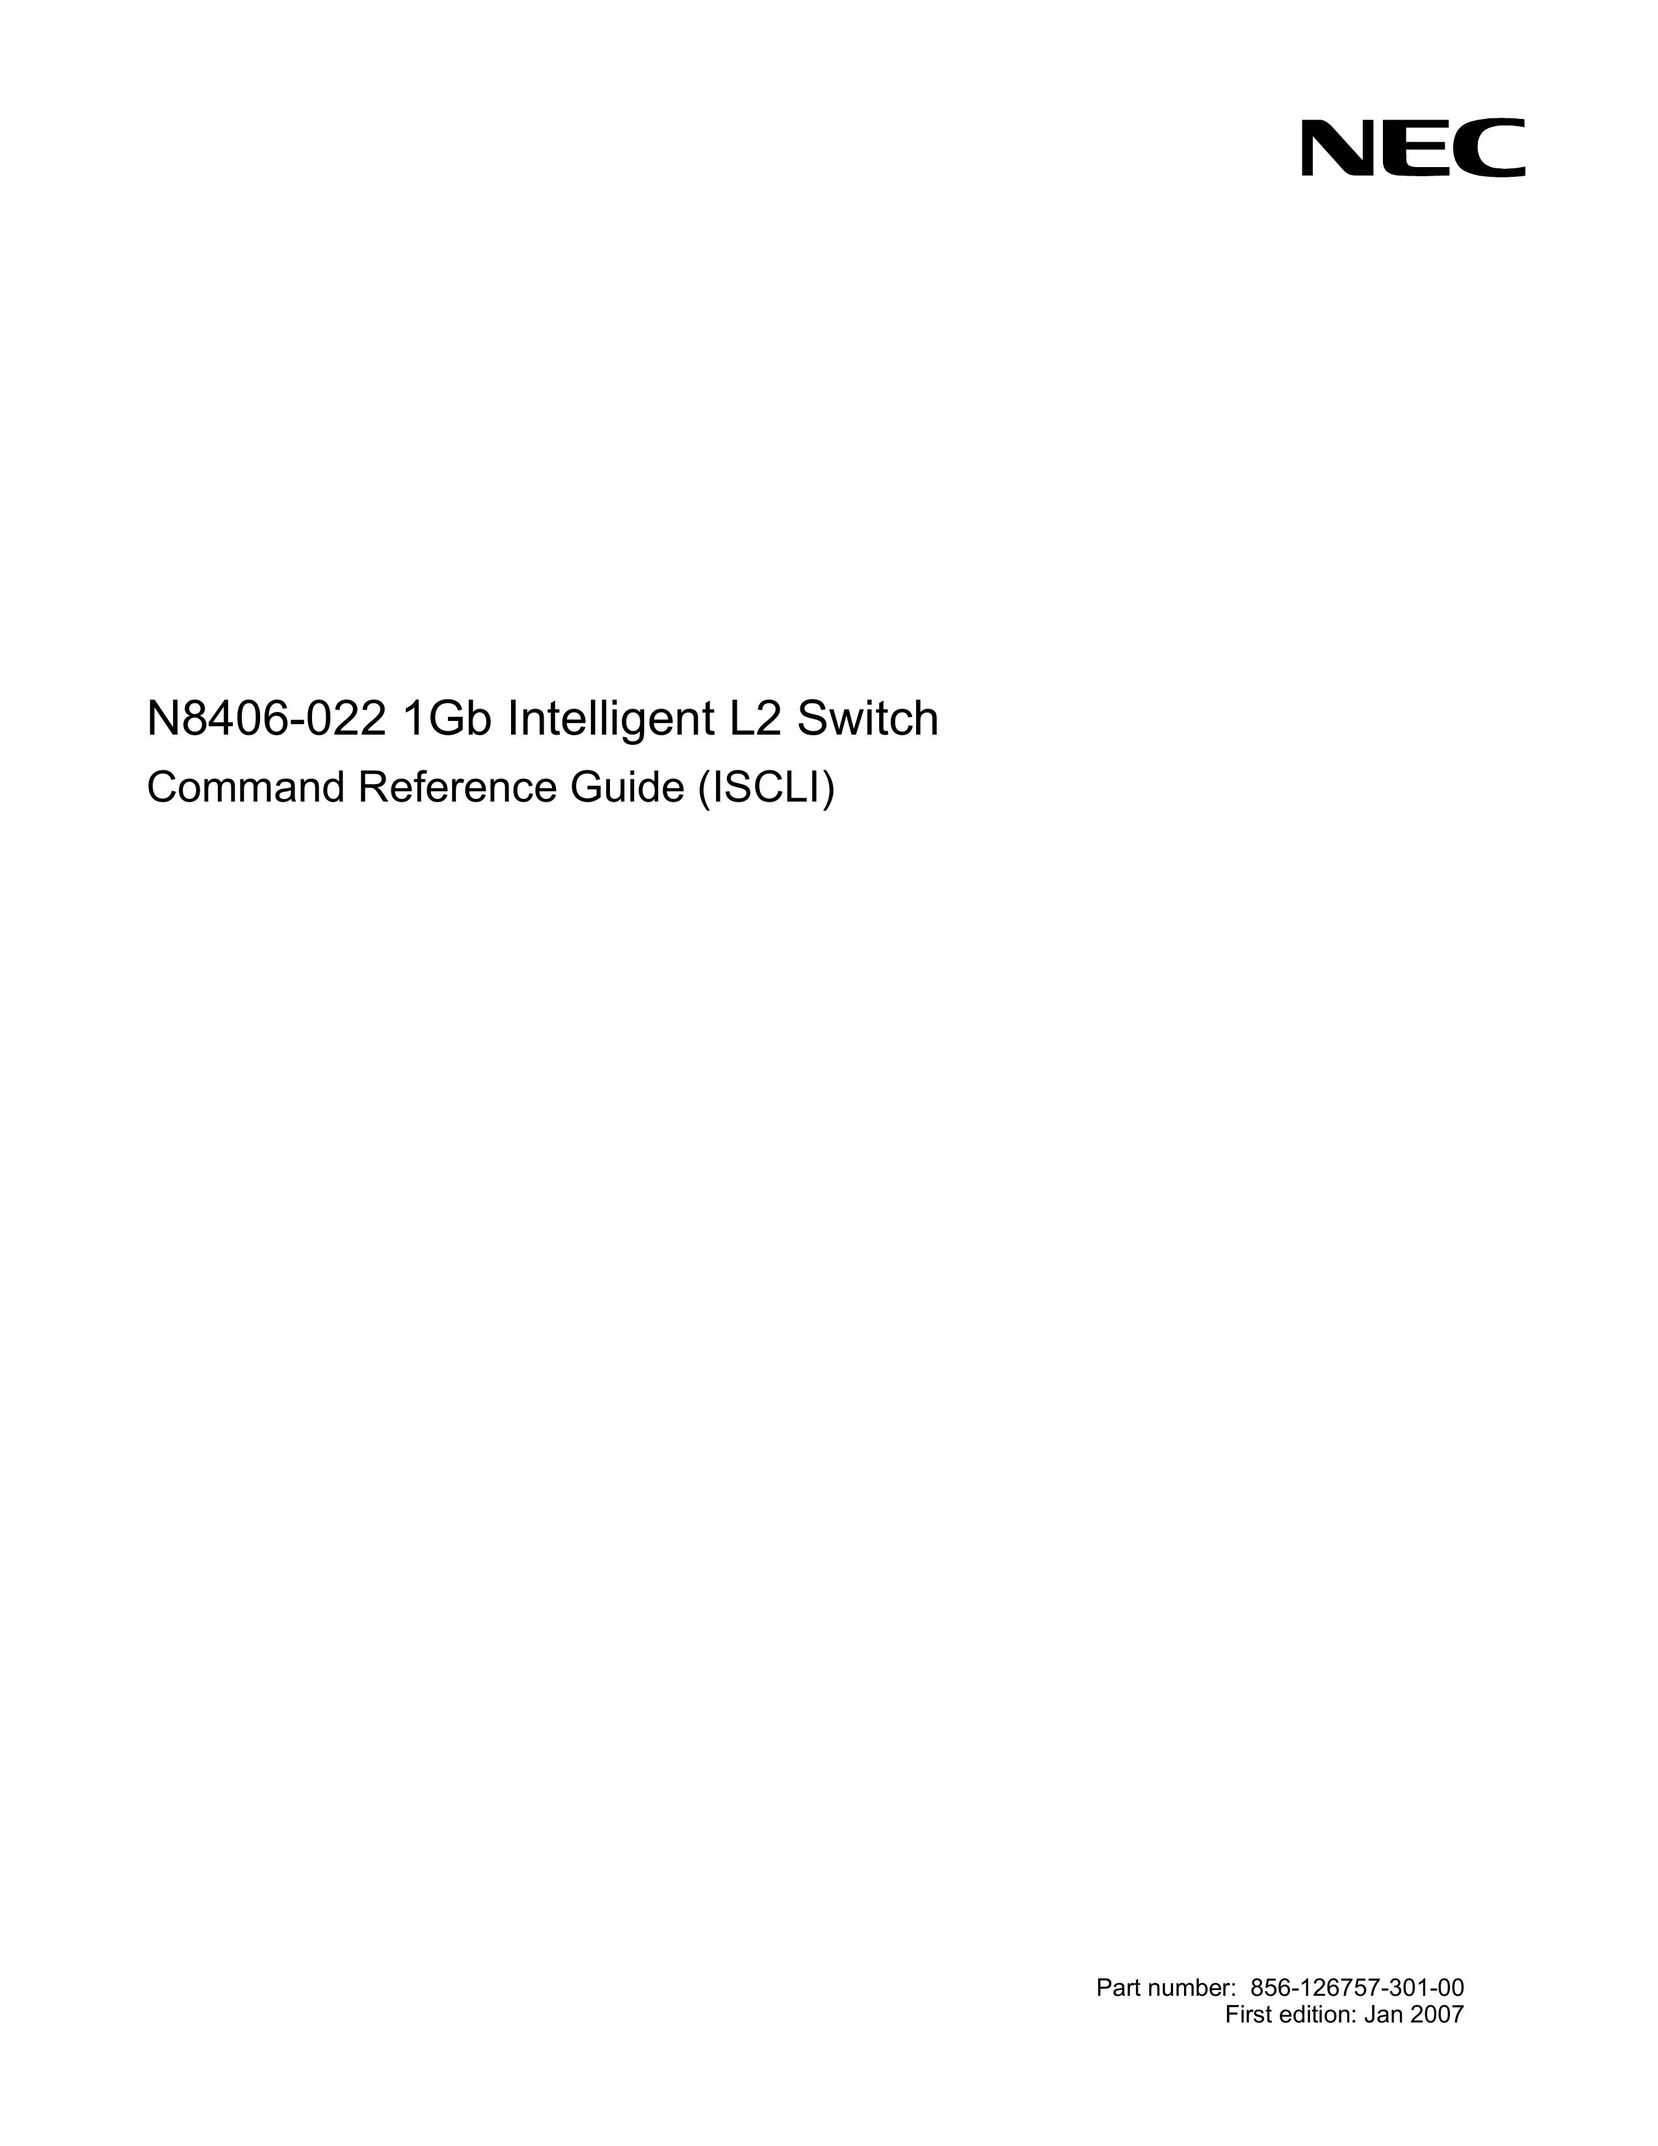 NEC N8406-022 Switch User Manual